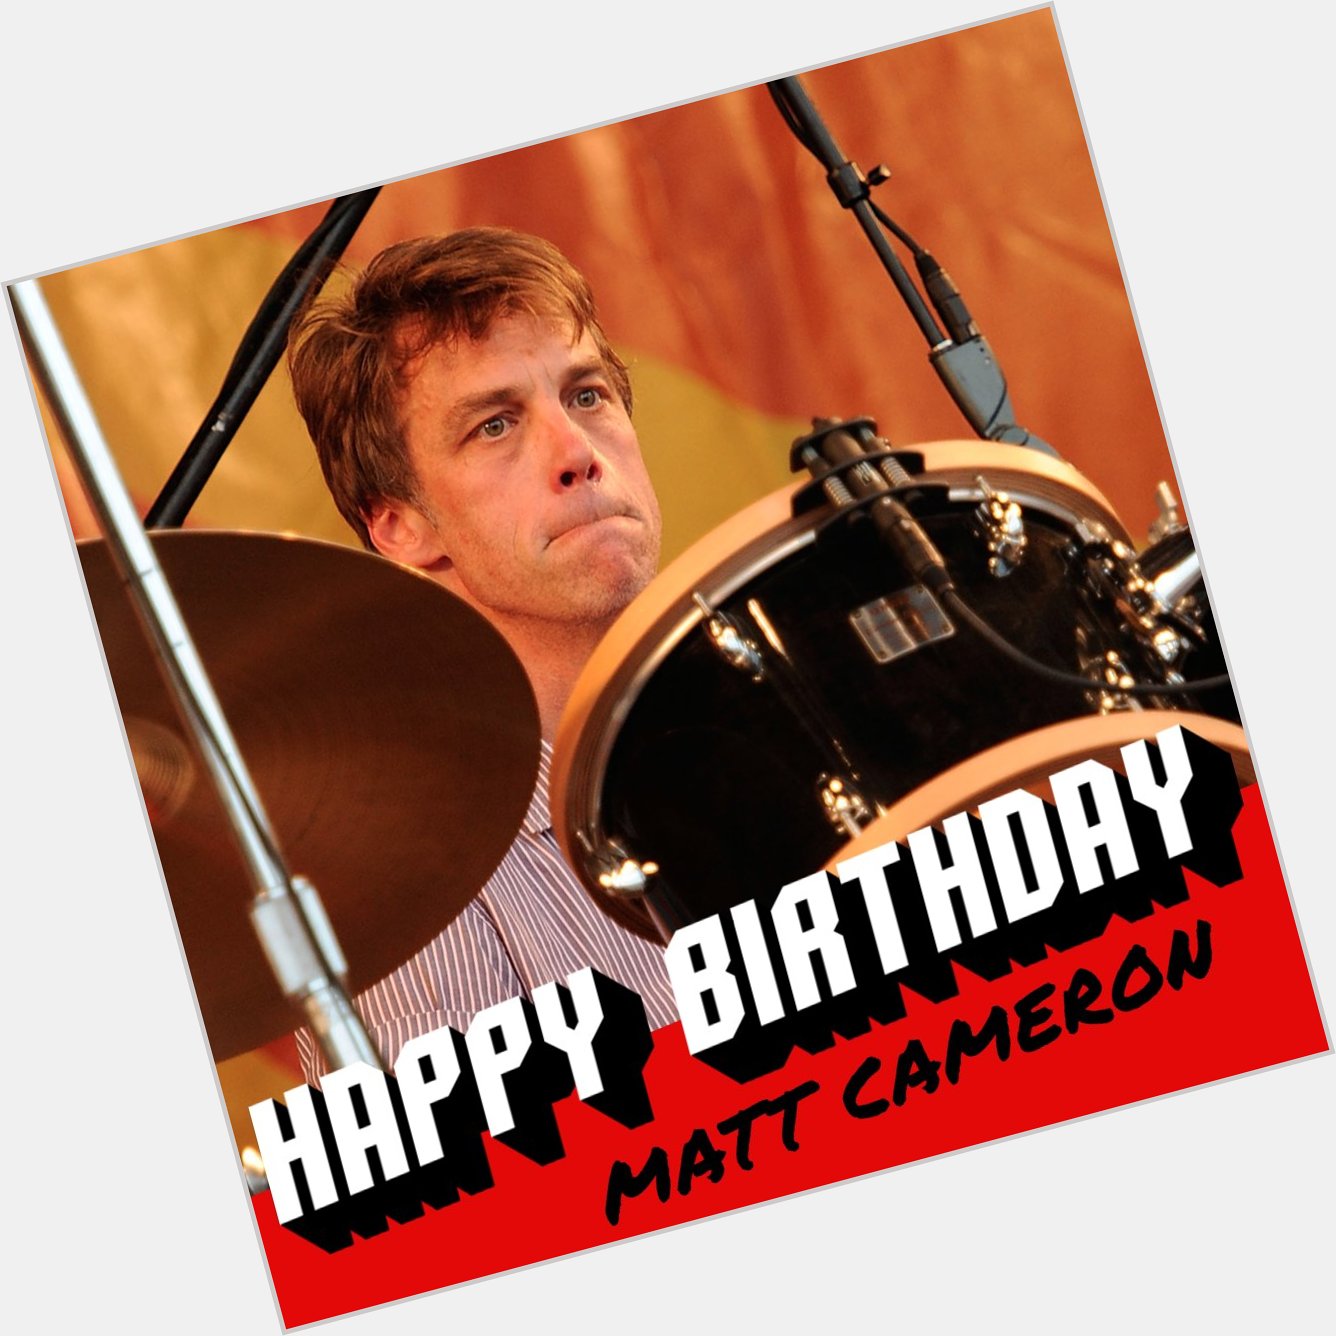 Happy 55th birthday to and drummer Matt Cameron! 